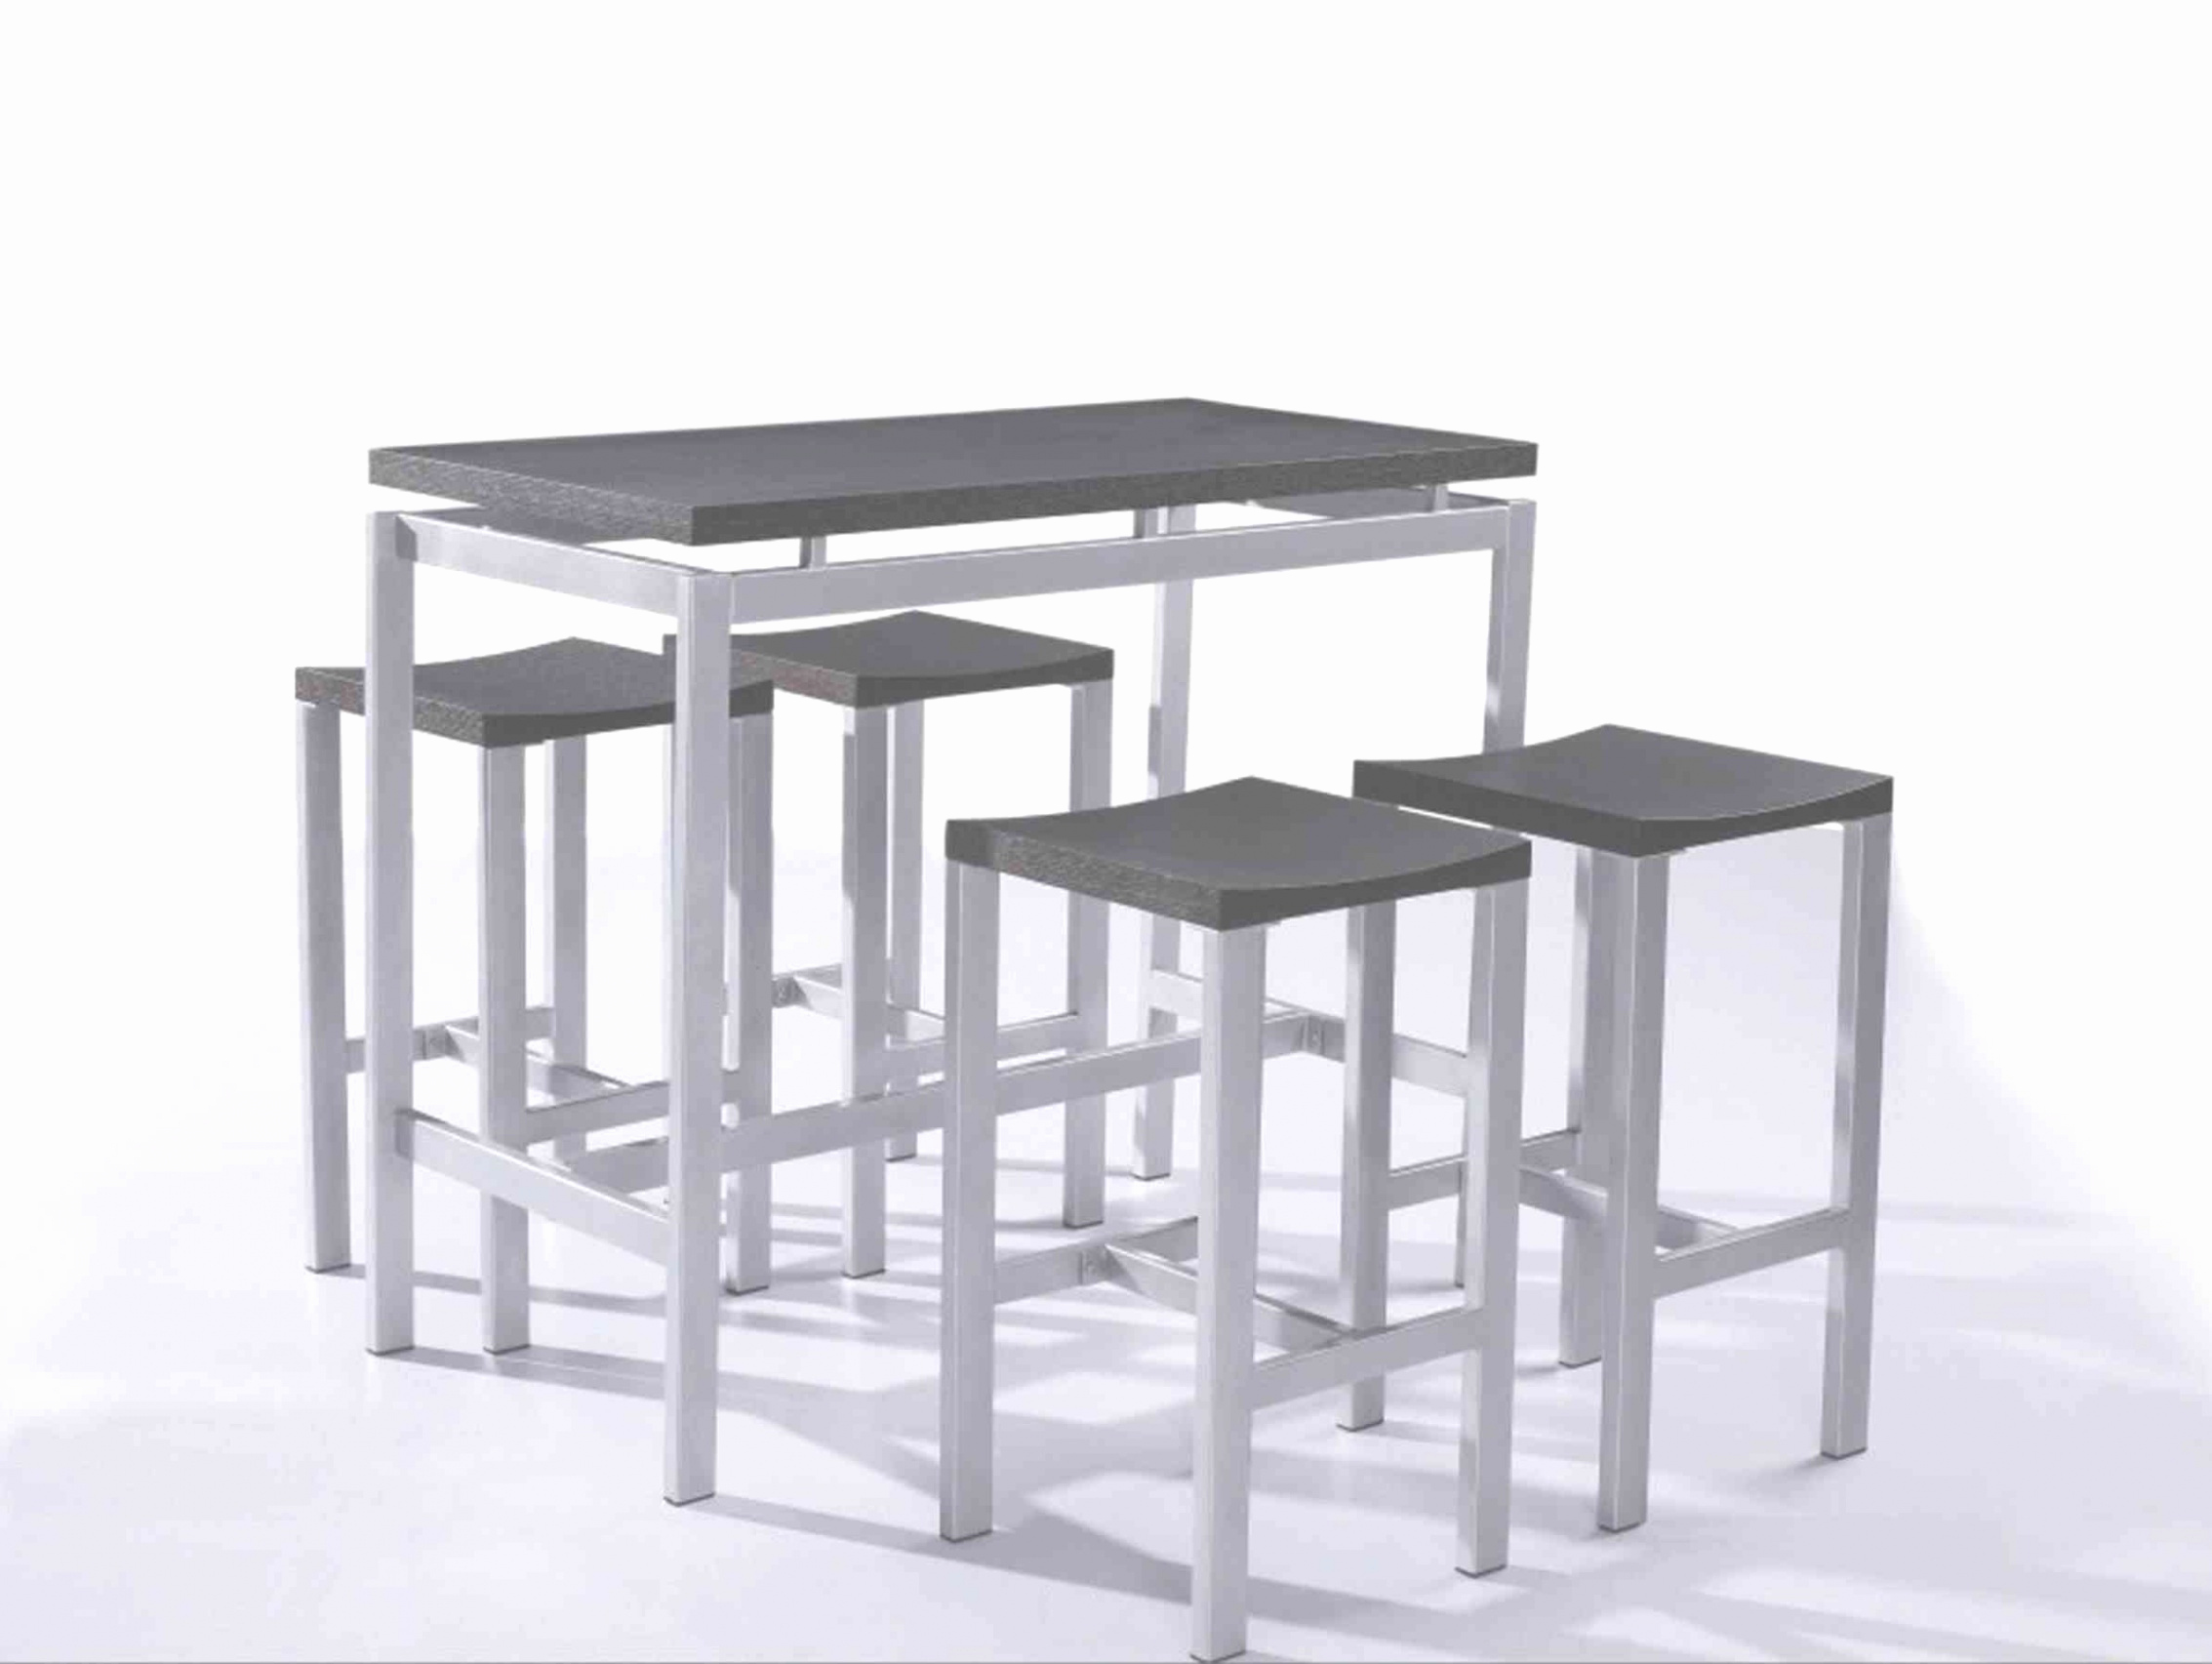 Promotion Table De Jardin Unique but Table De Cuisine Luxe Table De Jardin Promo Best Ikea